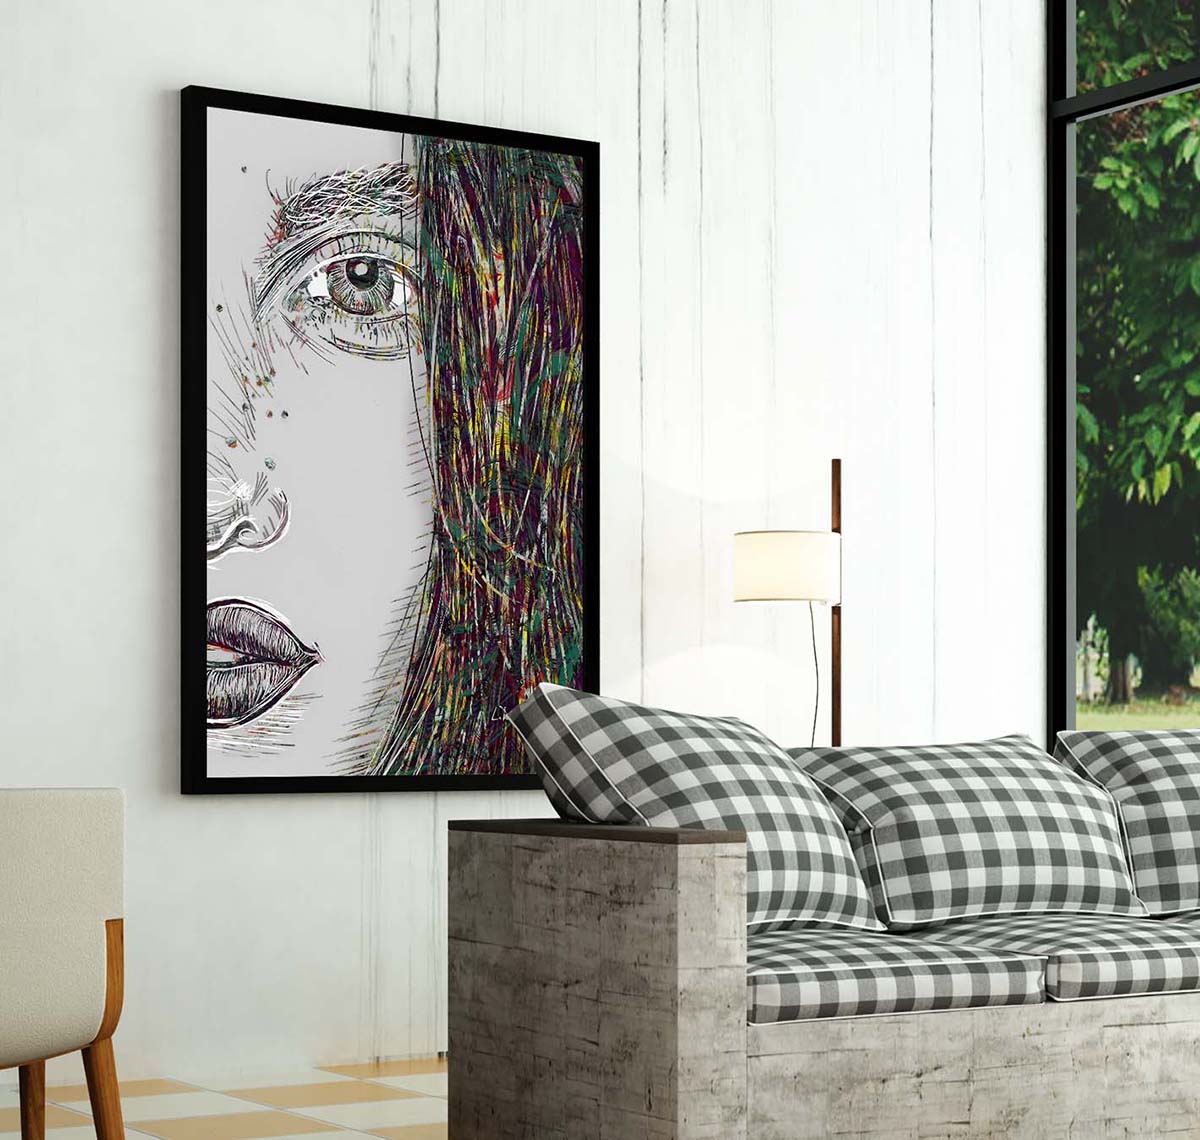  Tara's Eye art by Doug LaRue on a living room wall